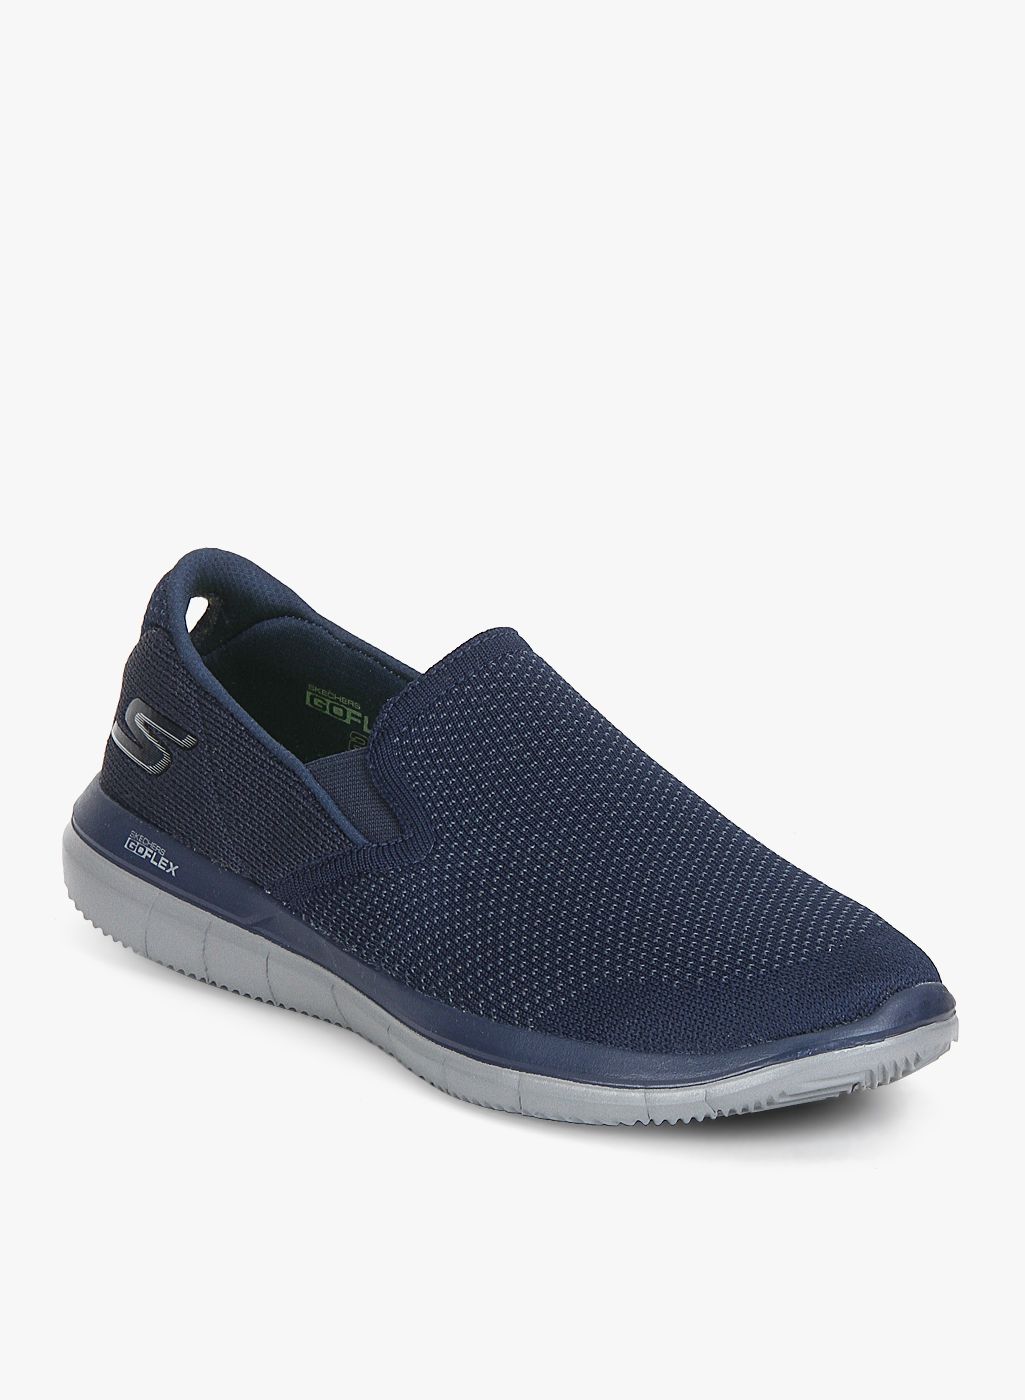 Buy Skechers Go Flex 2 - Maneuver Navy Blue Running Shoes Online 